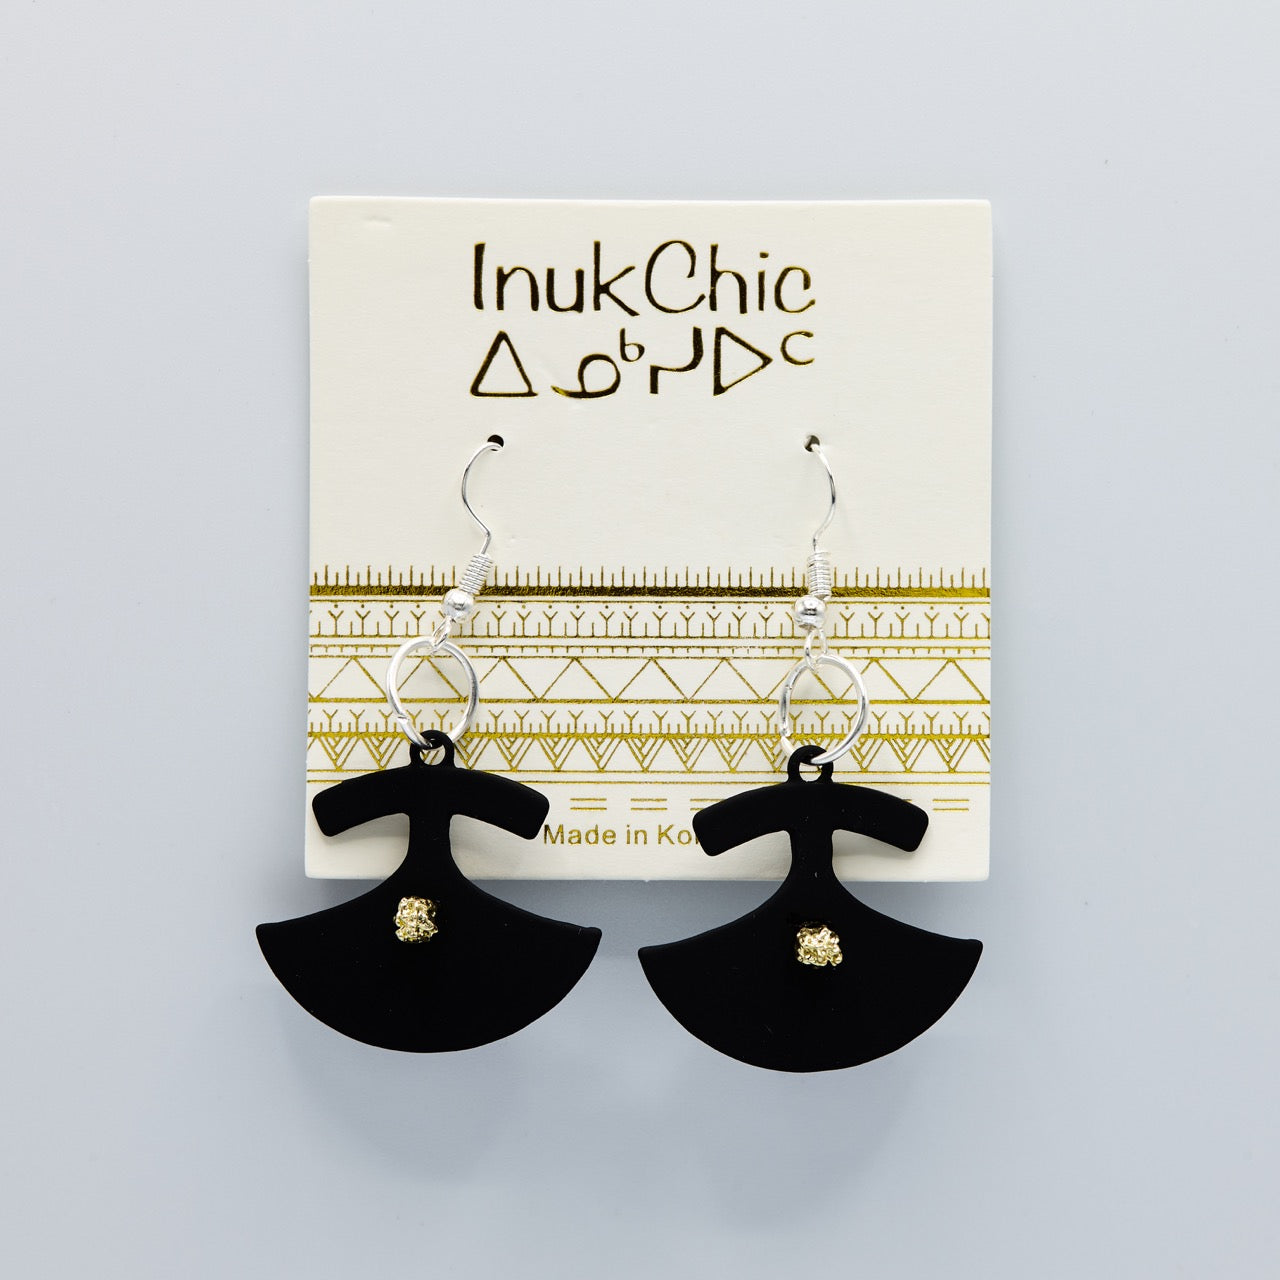 InukChic® Earring - Ulu - Black (pair)